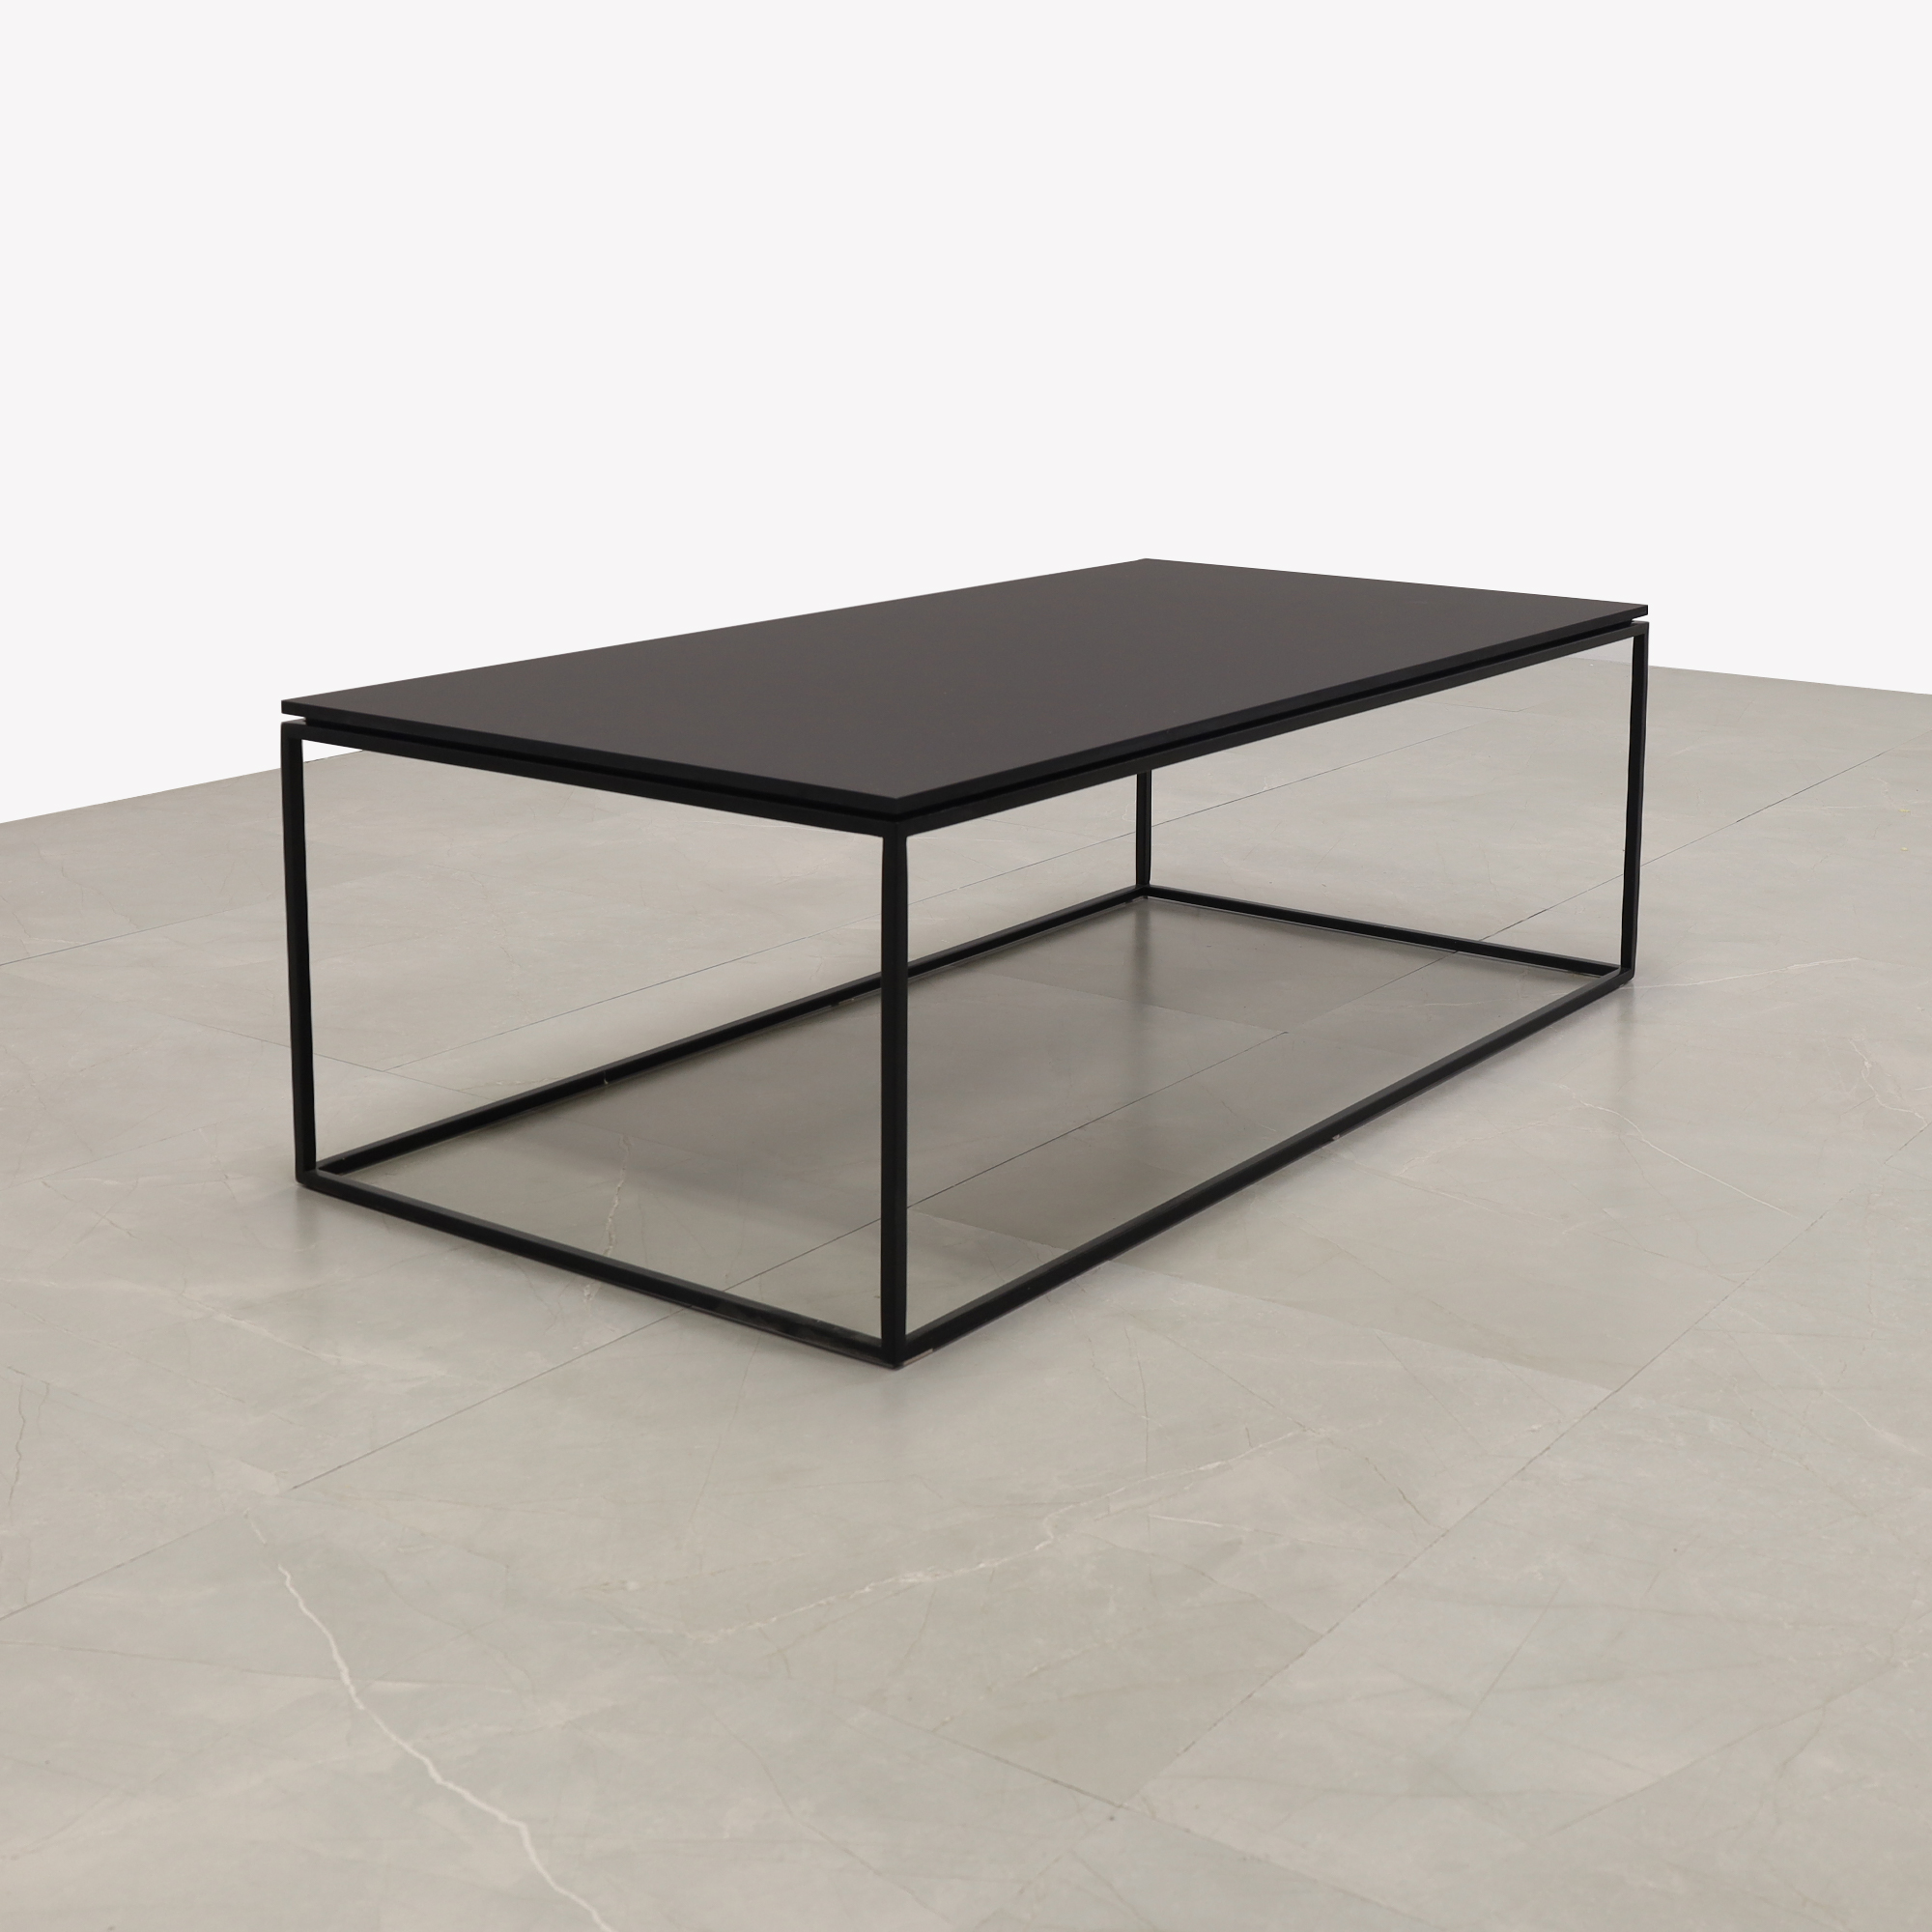 Aspen Rectangular Lobby Table in black OPAK engineered stone top and black metal frame shown here.